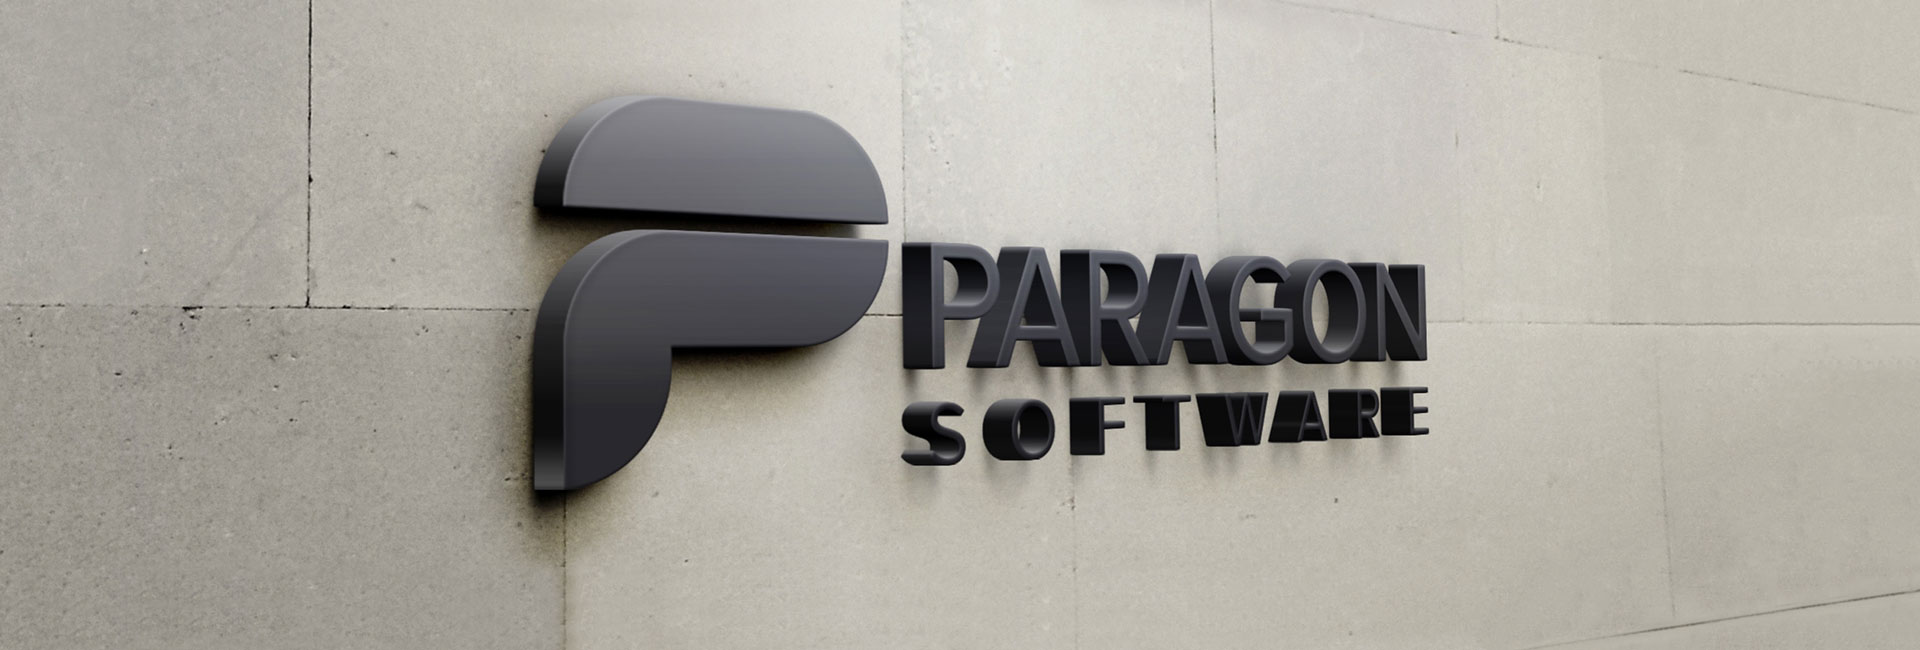 paragon partition manager server 7.0.1274